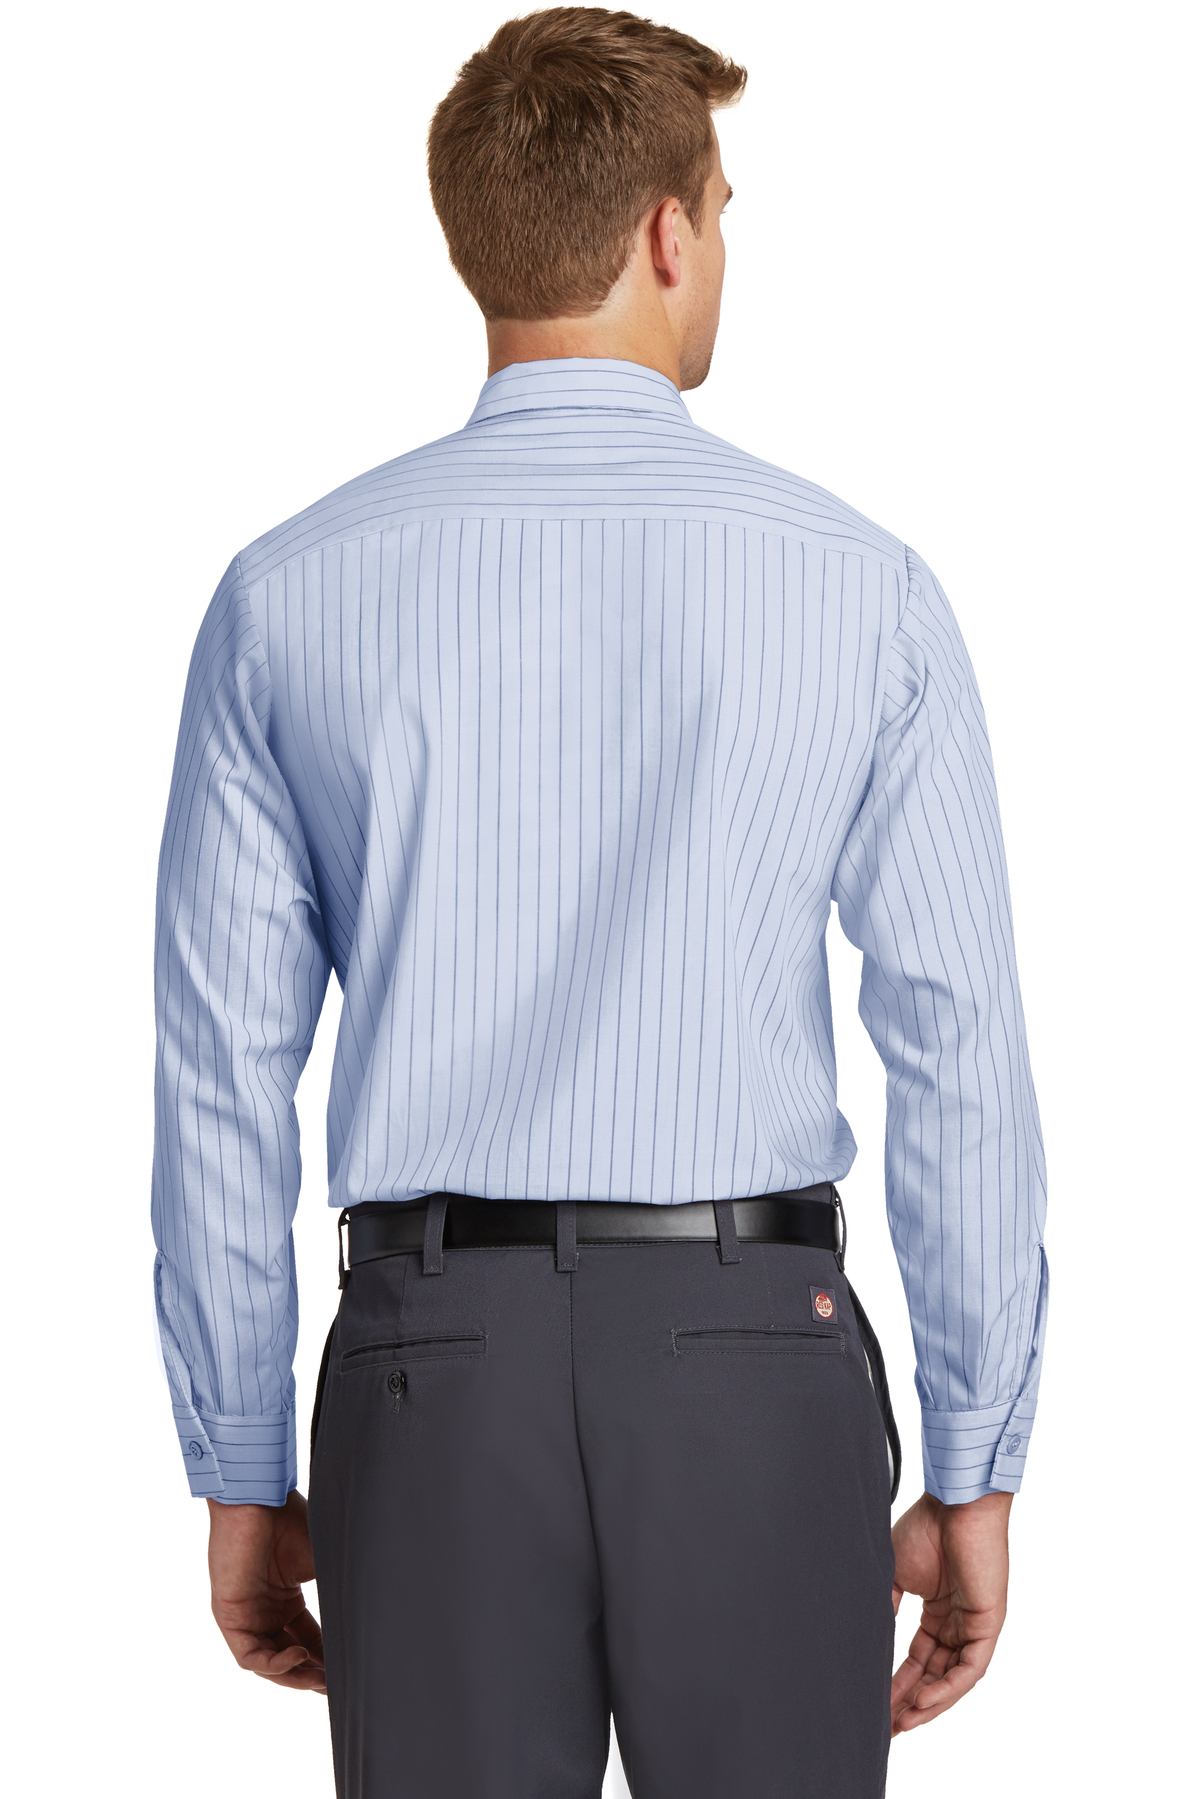 Red Kap Long Sleeve Striped Industrial Work Shirt | Product | SanMar